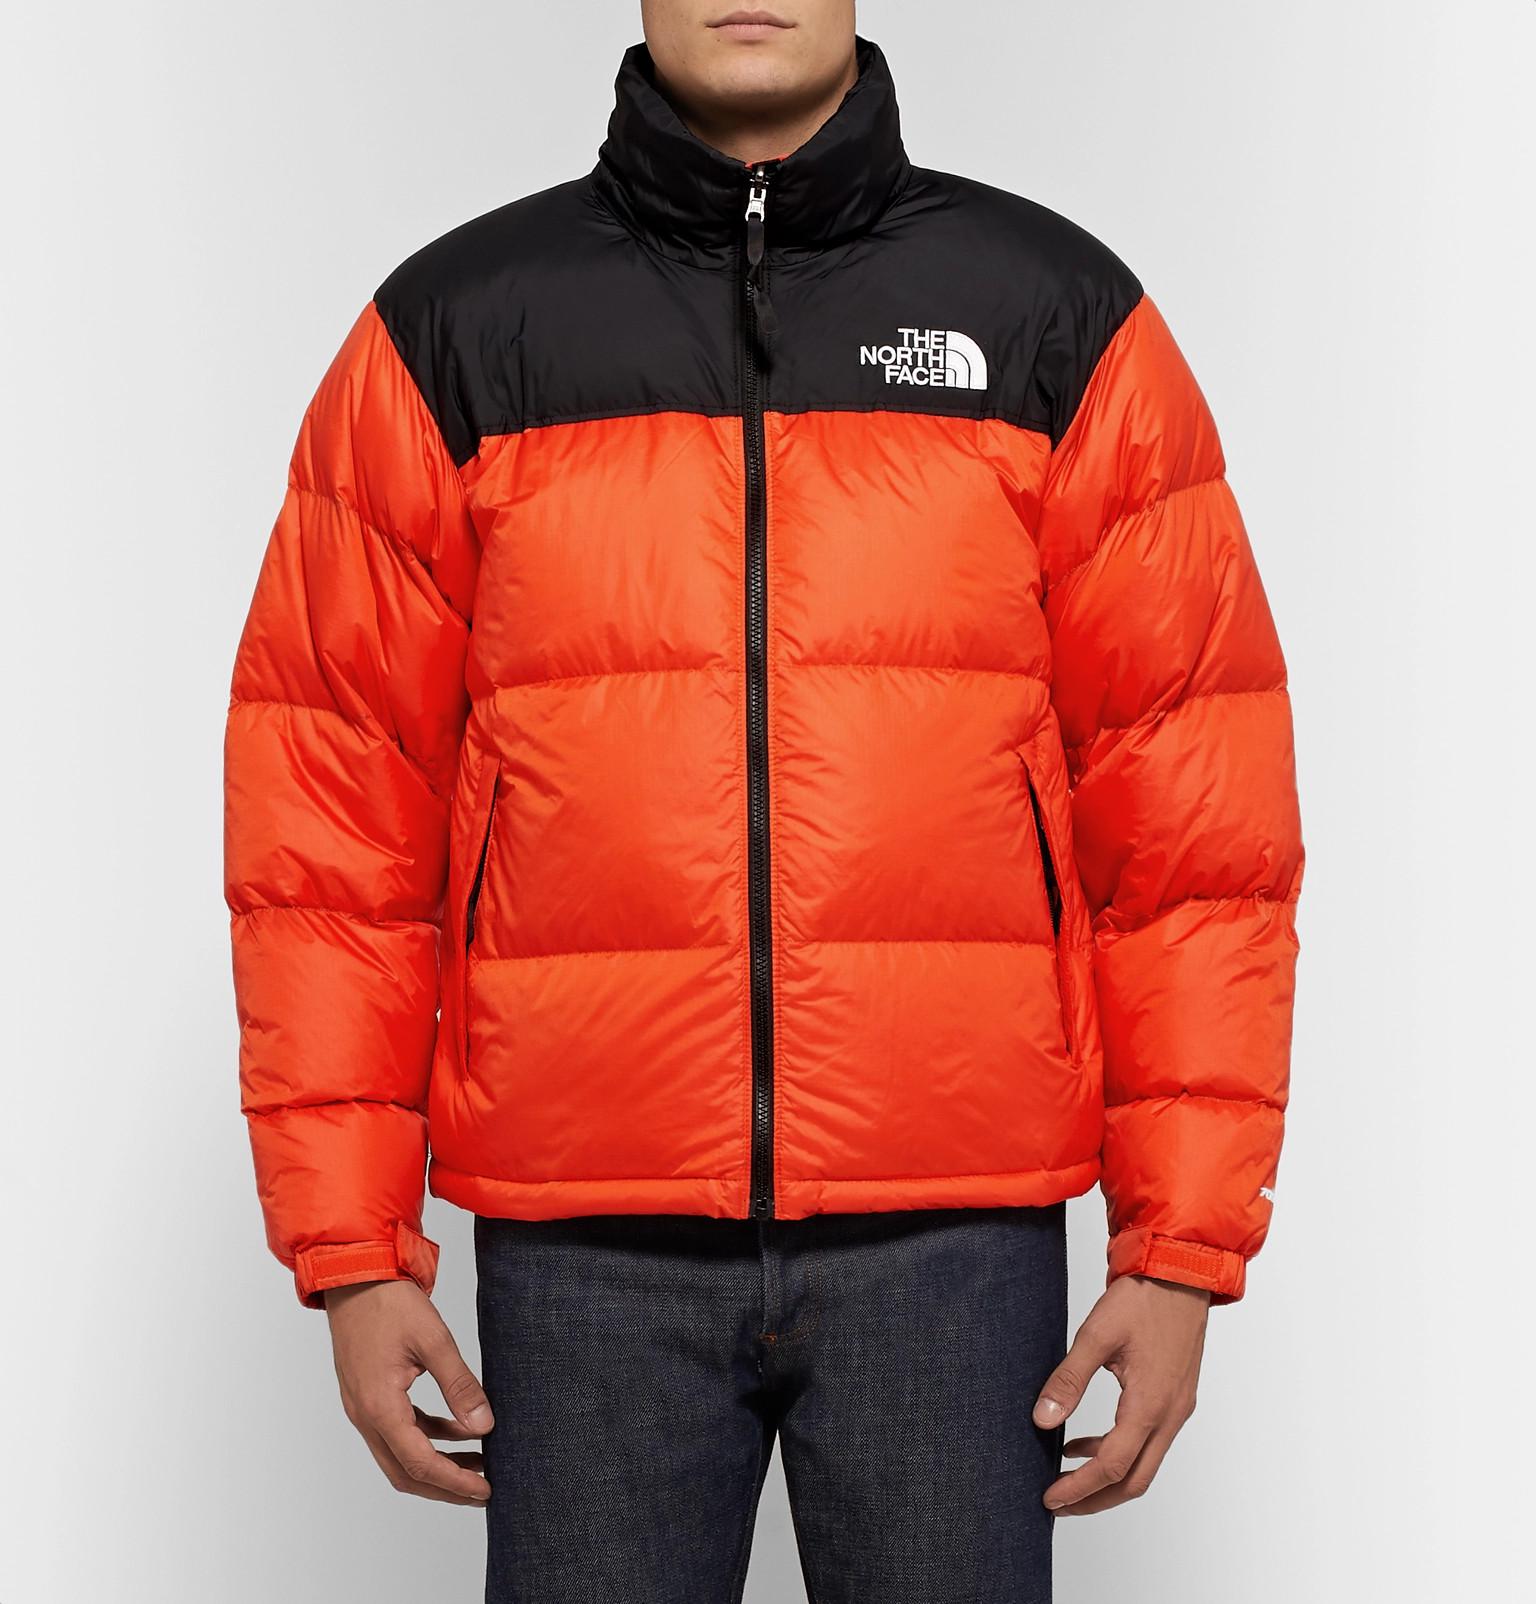 orange and black north face jacket